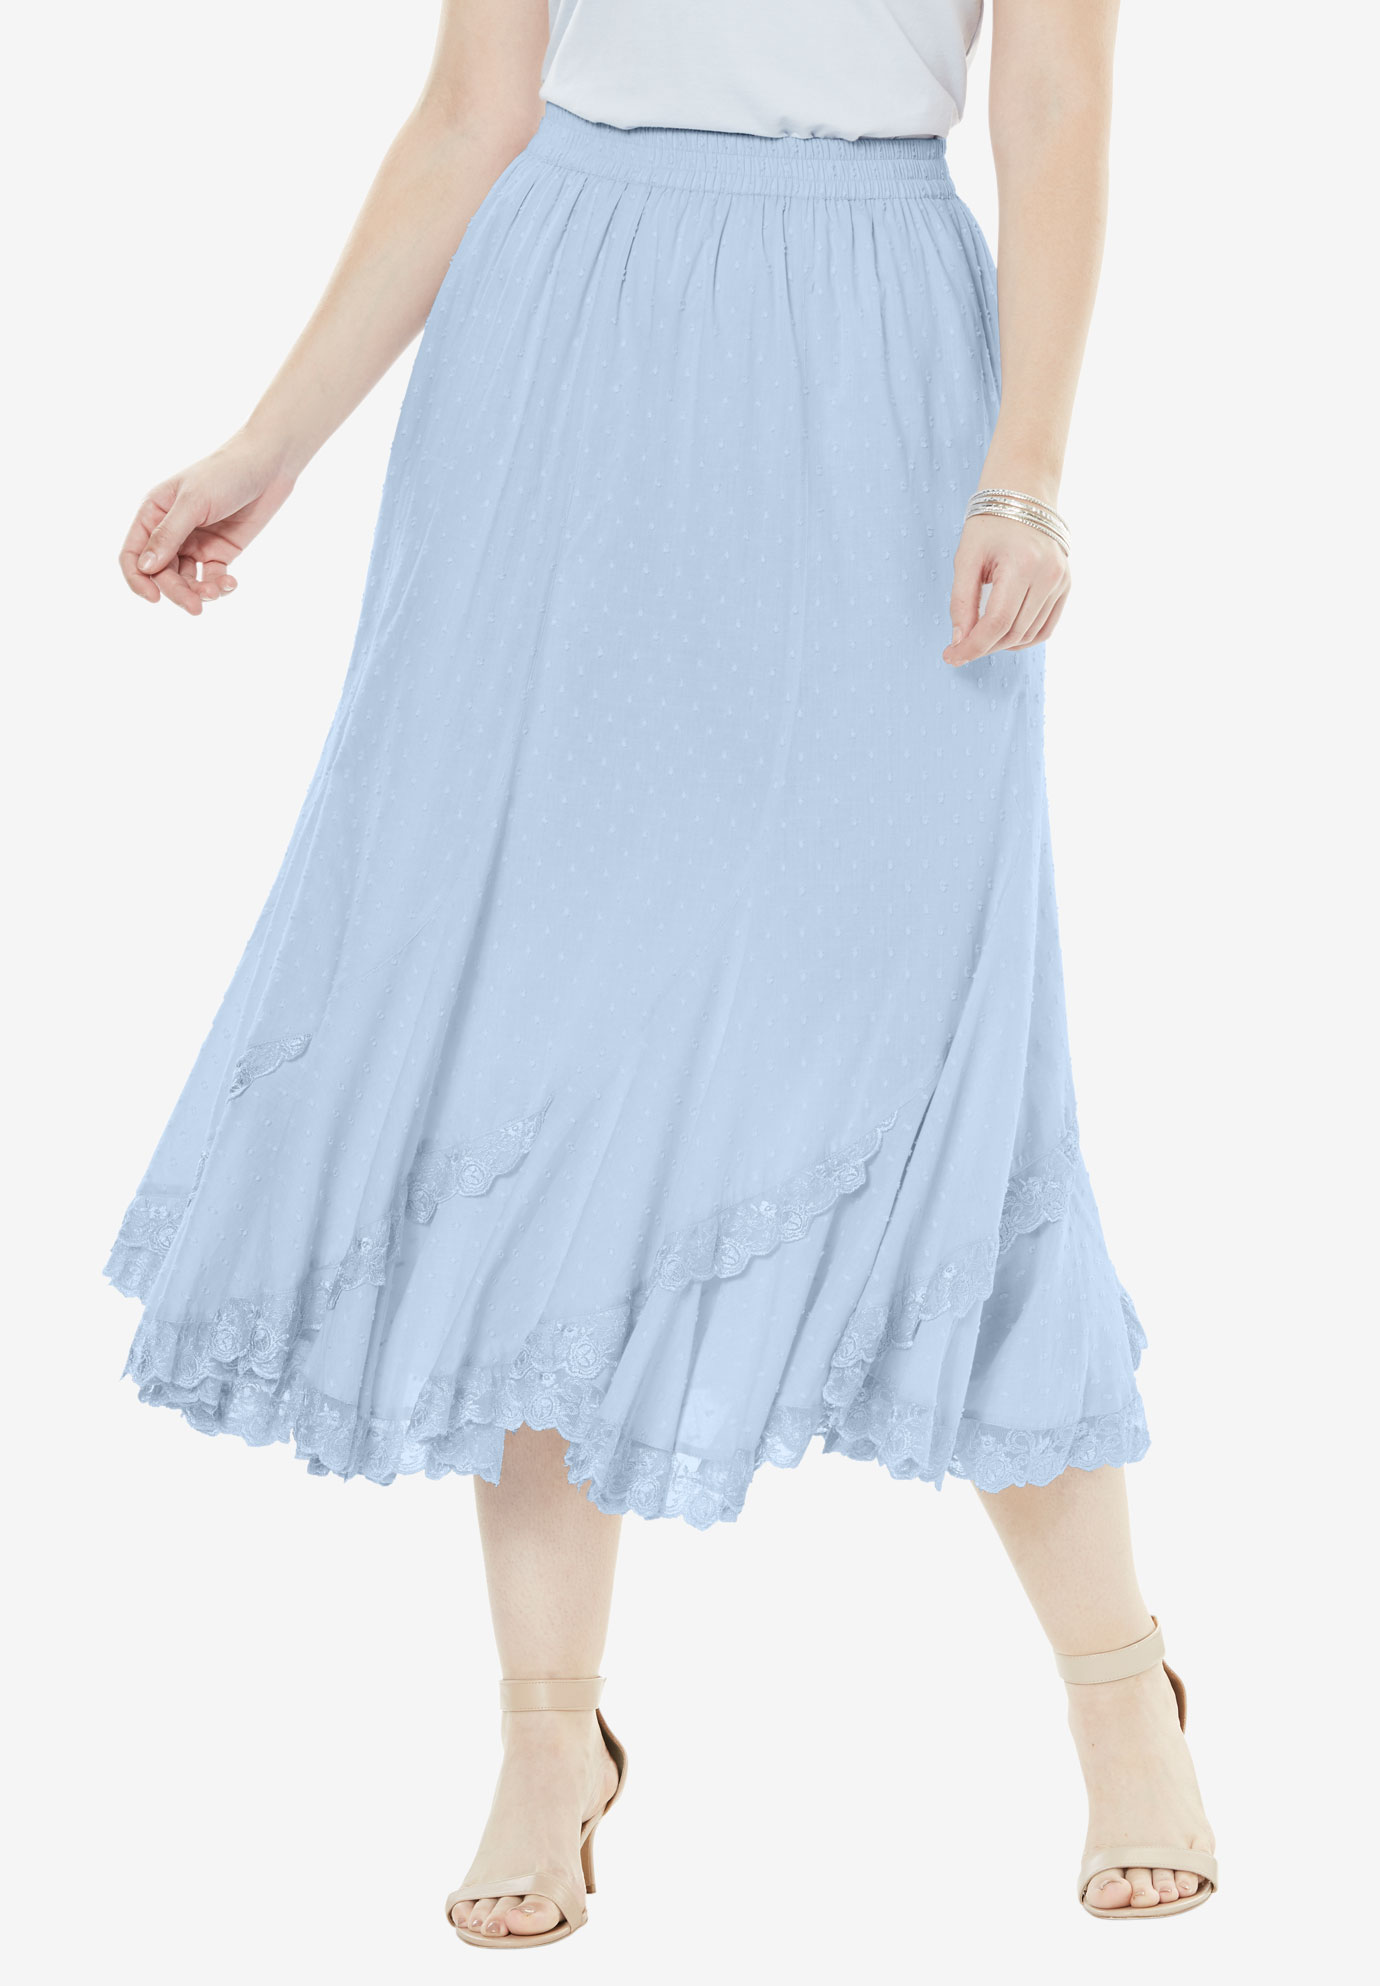 Cotton Lace Skirt| Plus Size Skirts | Full Beauty